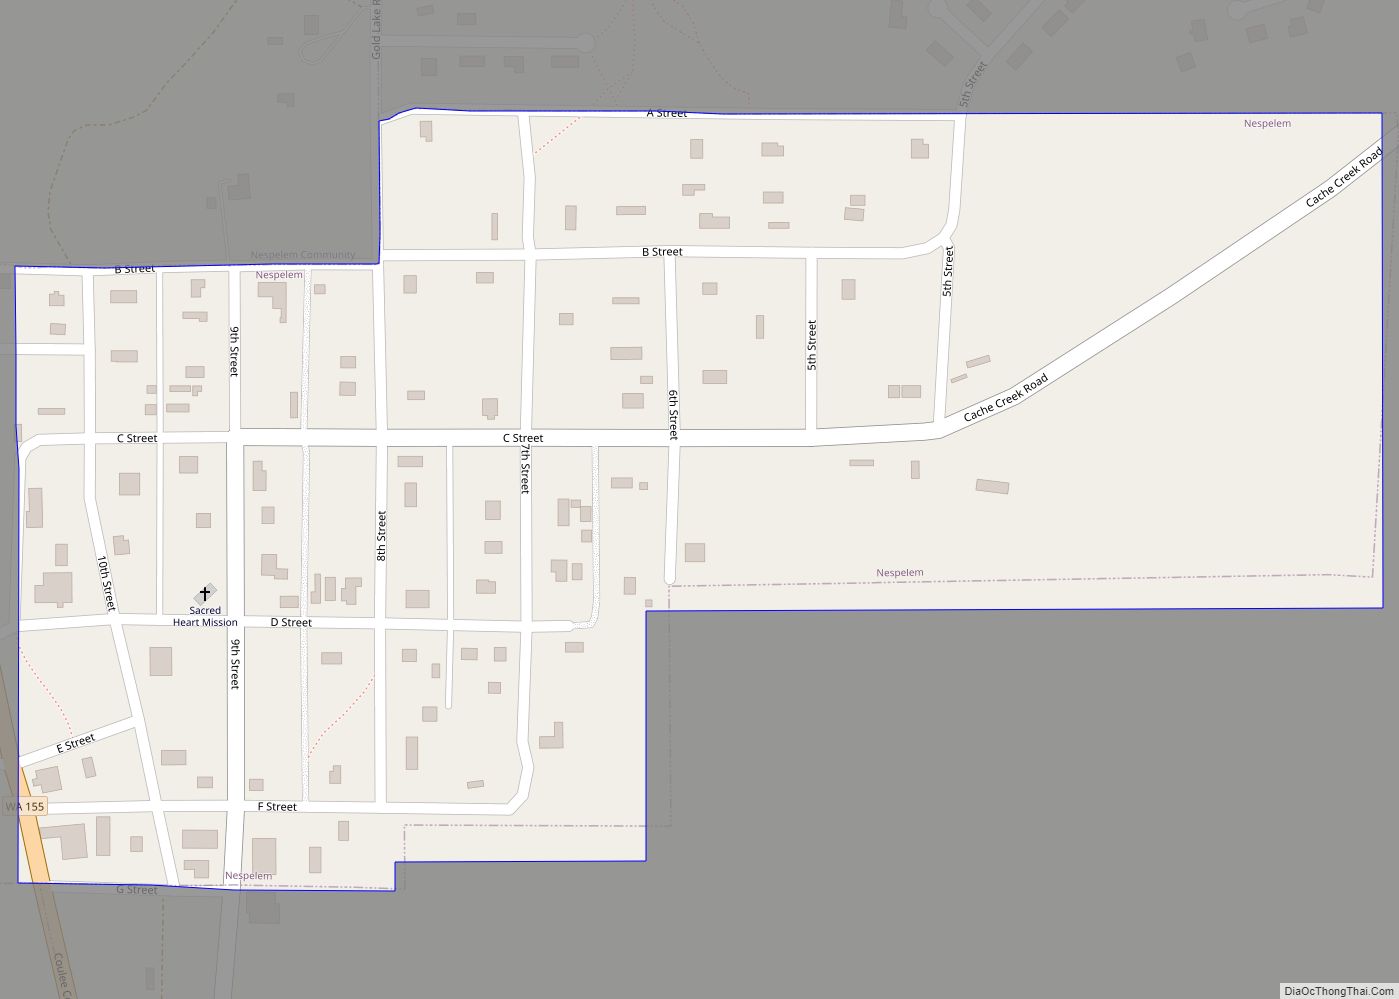 Map of Nespelem town